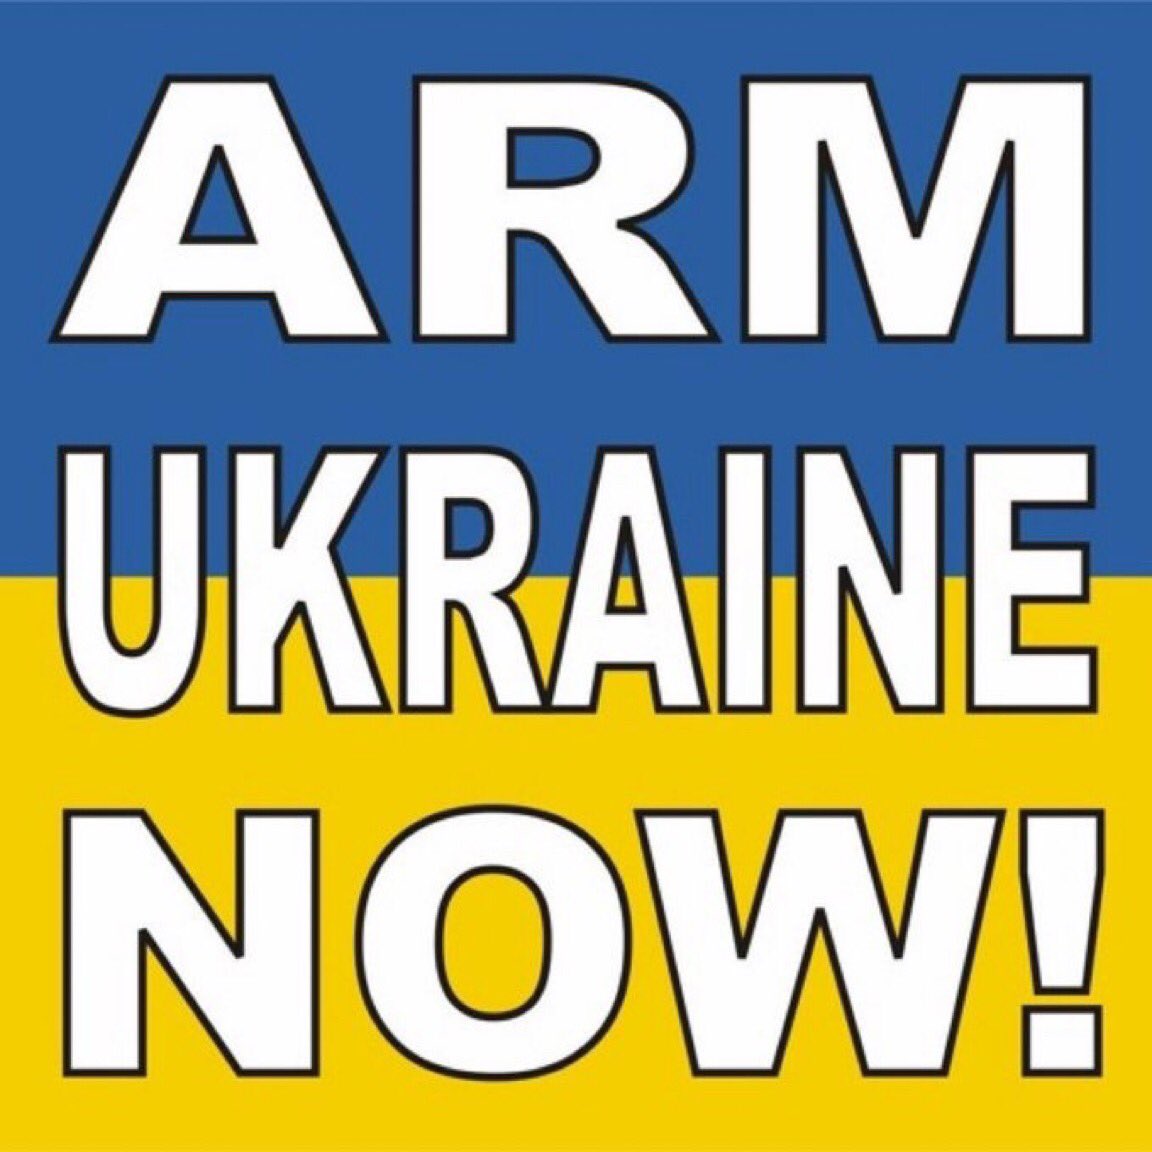 @CzarKiller1 Let's get this done!!!!!!! 🙏🇺🇦💪💪🫡
🇺🇦#UkraineWillWin 🇺🇦
#SlavaUkraïni
#GloryToUkraine
#StandUpForUkraine
#CrimeaIsUkraine
#ArmUkraineNow
#ArmUkraineASAP
#ArmUkraineToWinNow
#RussianInvasionOfUkraine
🆘 #StopRussianAggression 🆘